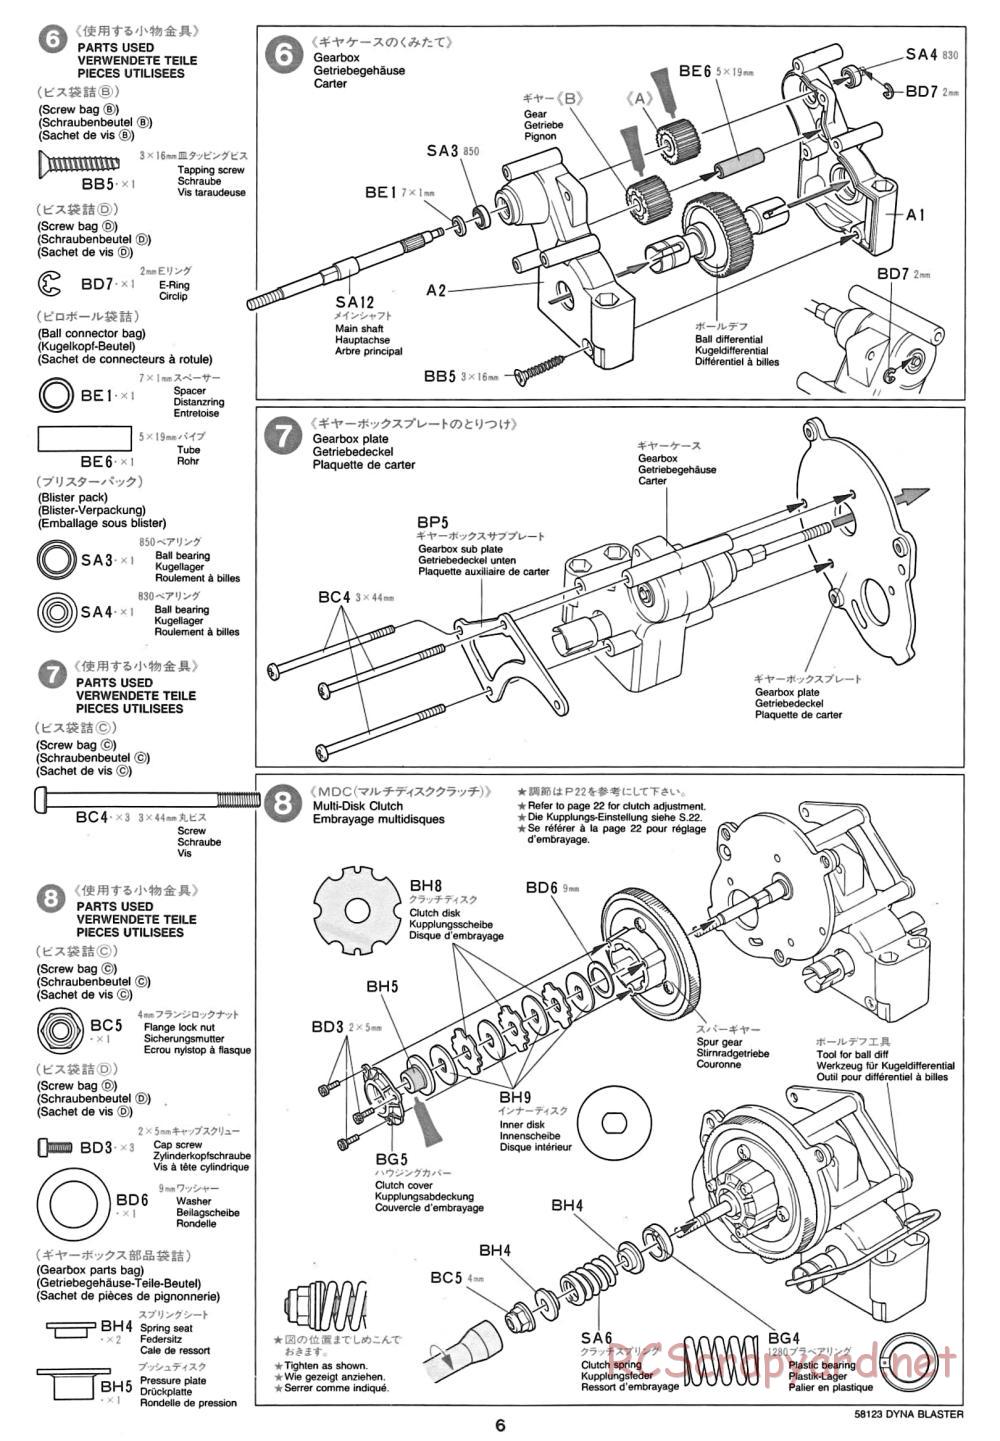 Tamiya - Dyna Blaster Chassis - Manual - Page 6